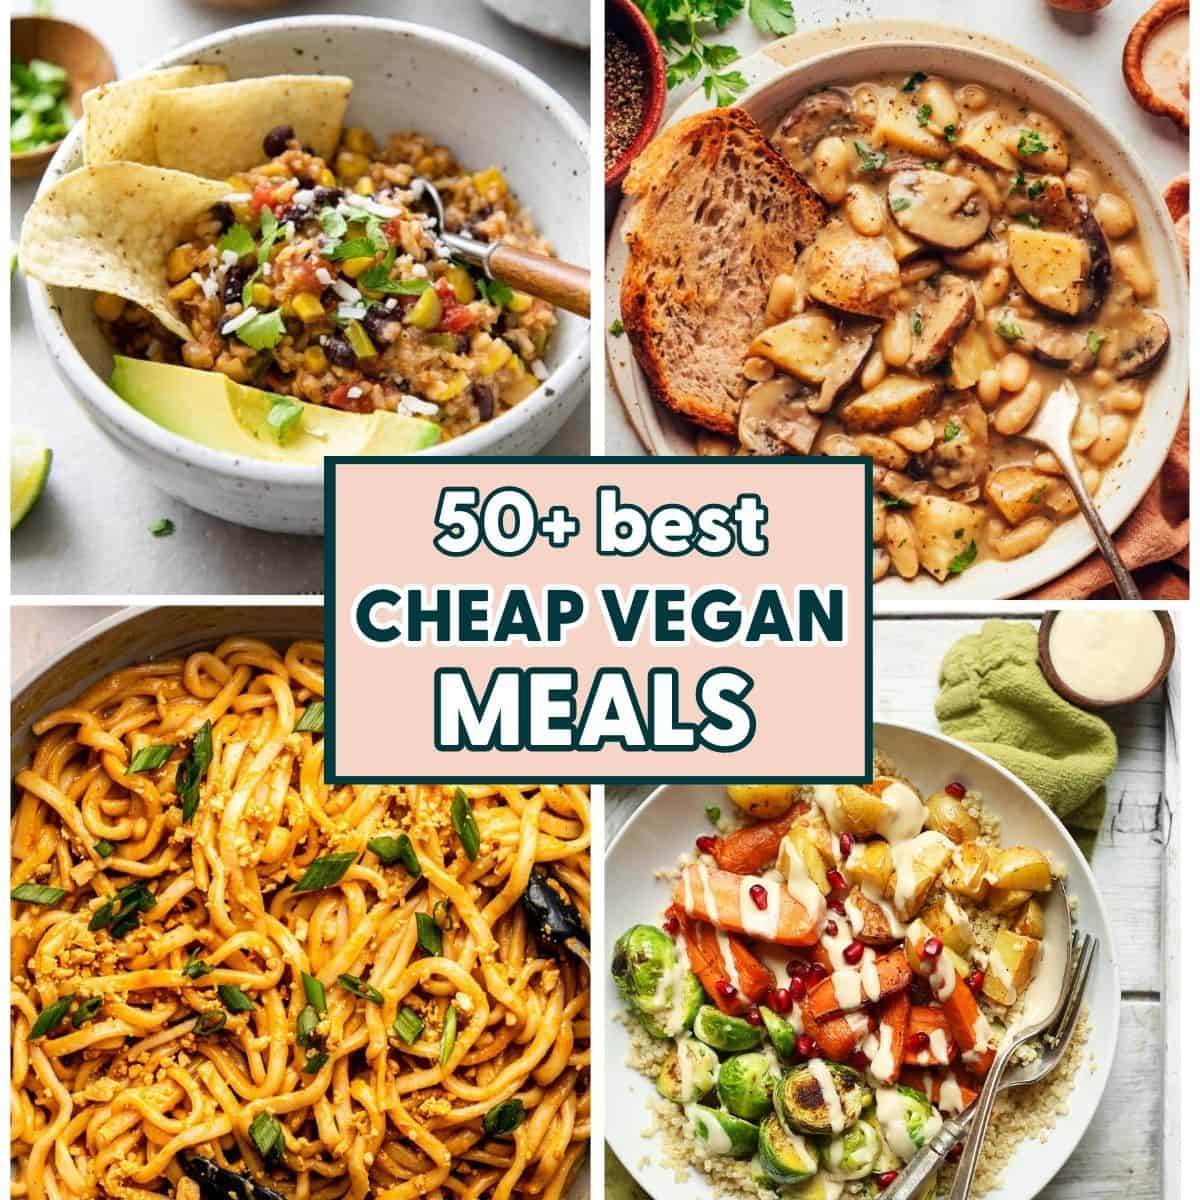 Wallet-friendly vegan meals